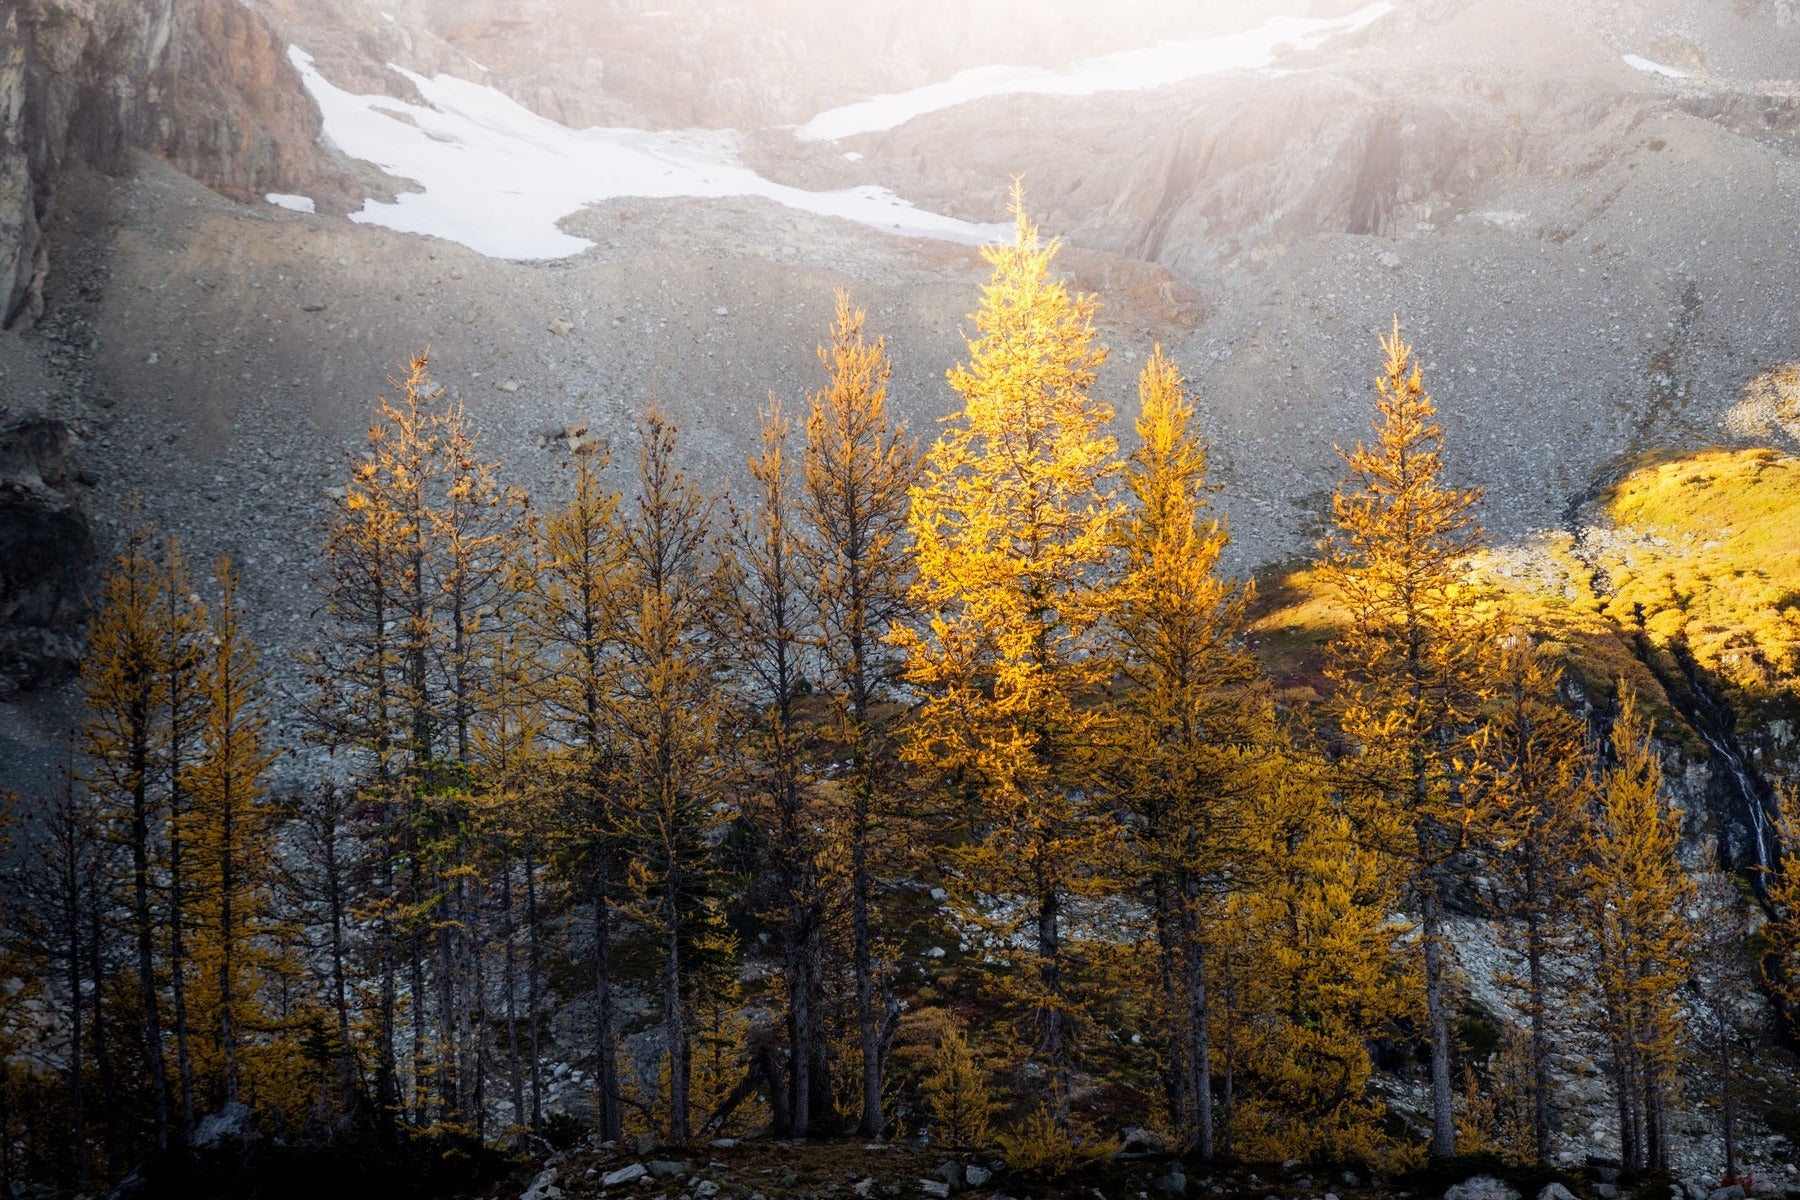 Golden yellow trees among the alpine environment